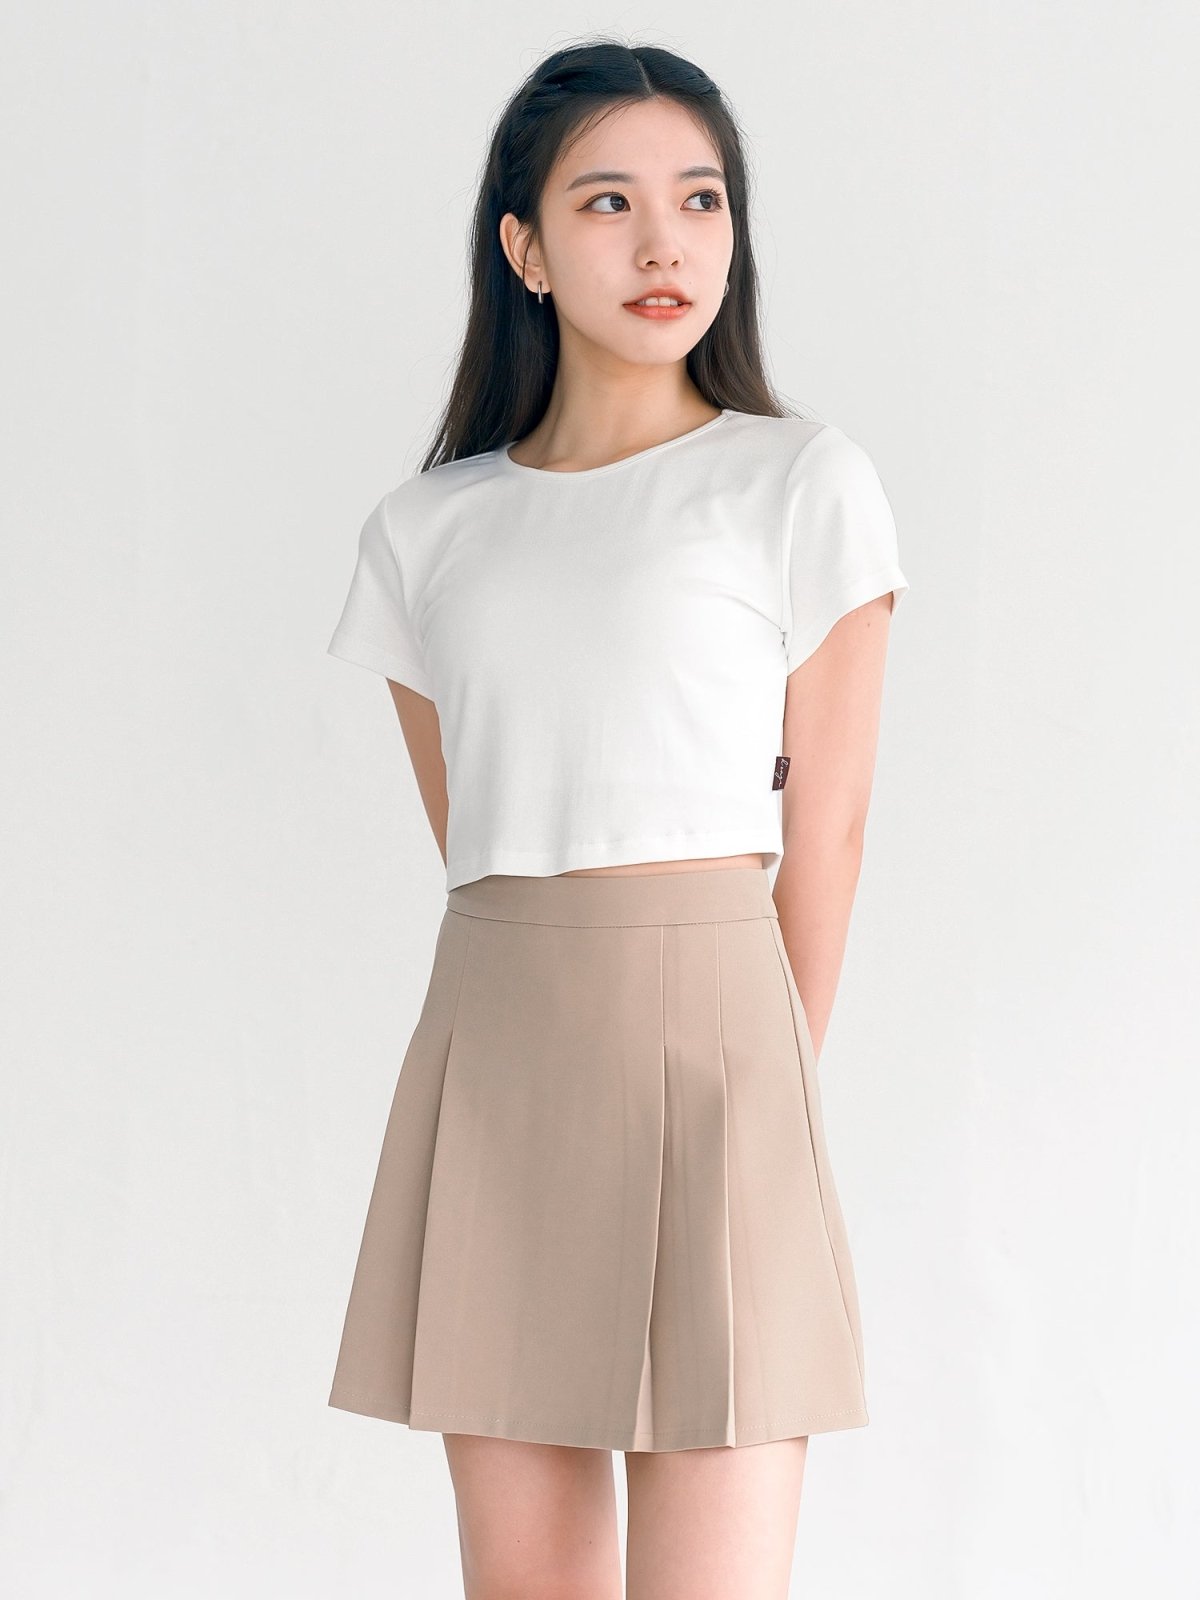 Seraphine Pleated Mini Skirt - DAG-G-220171KhakiS - Khaki Beige - S - D'zage Designs